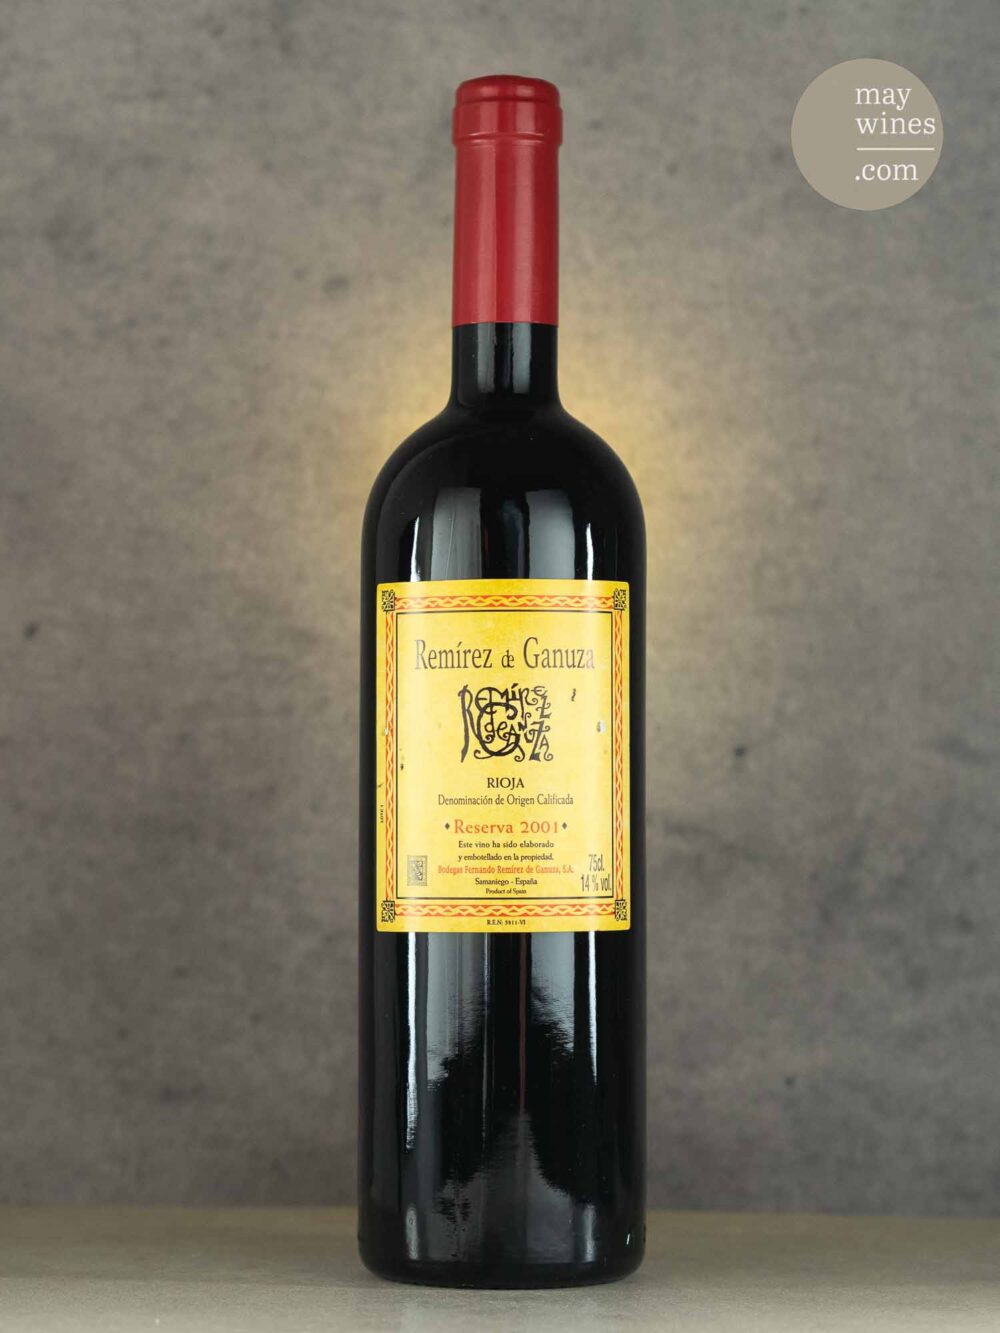 May Wines – Rotwein – 2001 Rioja Reserva - Remírez de Ganuza